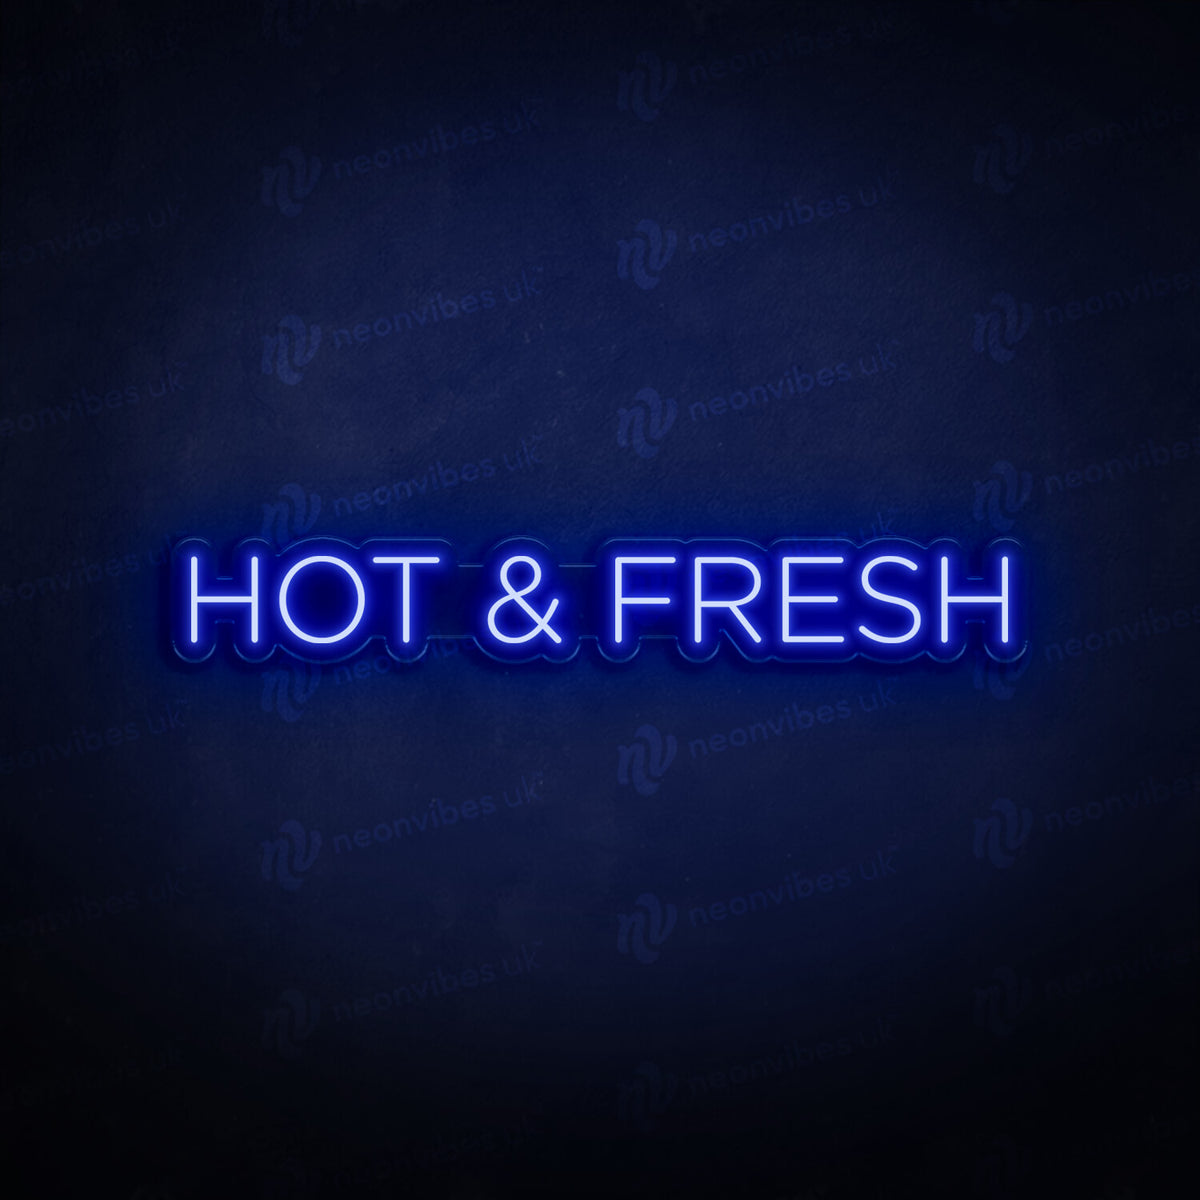 Hot &amp; Fresh neon sign